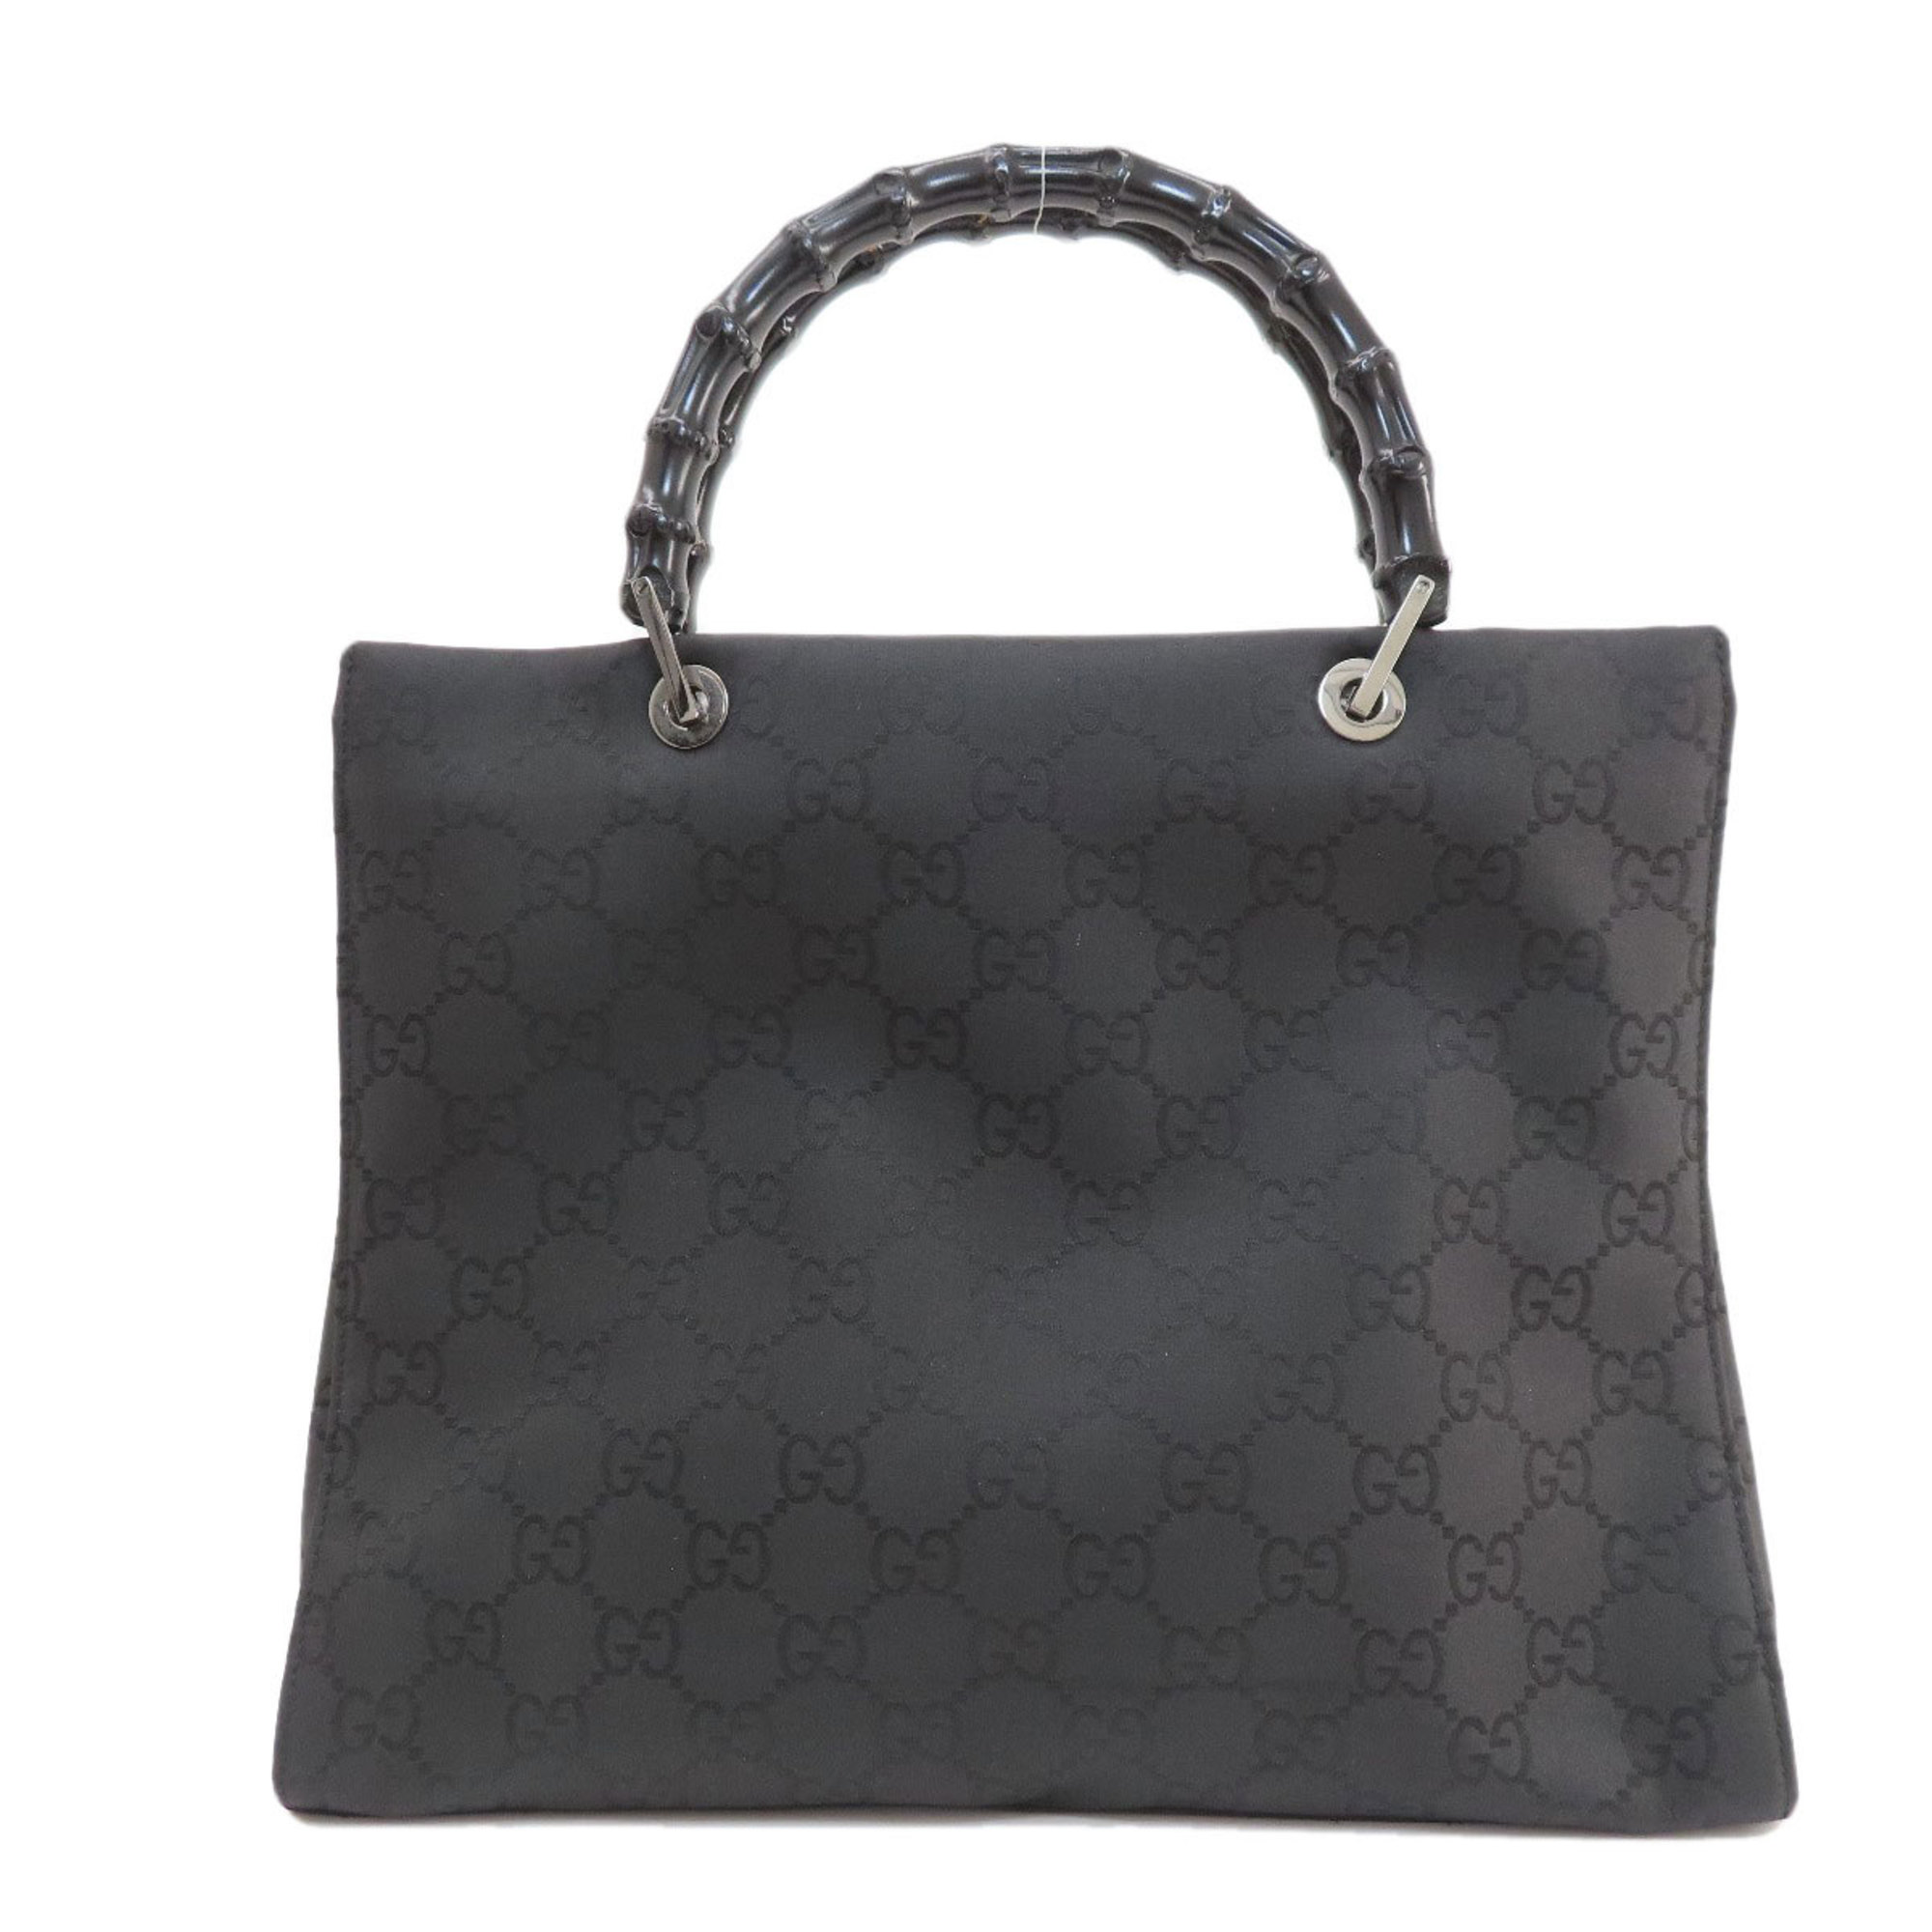 Gucci 002/1010 GG pattern bamboo tote bag, nylon material, women's, GUCCI